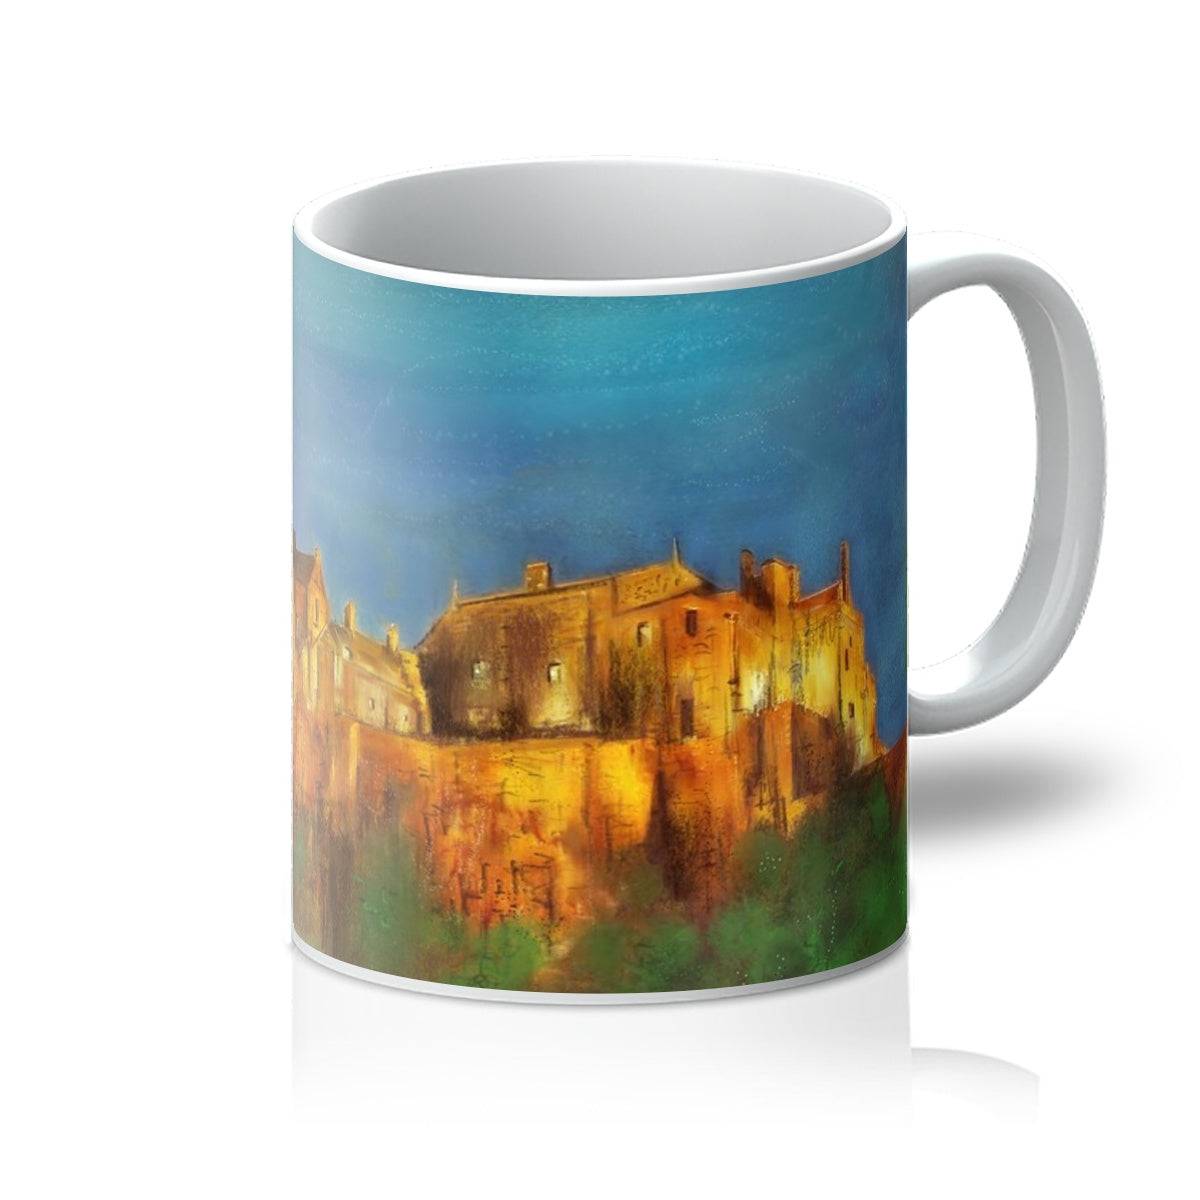 Stirling Castle Art Gifts Mug-Mugs-Scottish Castles Art Gallery-11oz-White-Paintings, Prints, Homeware, Art Gifts From Scotland By Scottish Artist Kevin Hunter